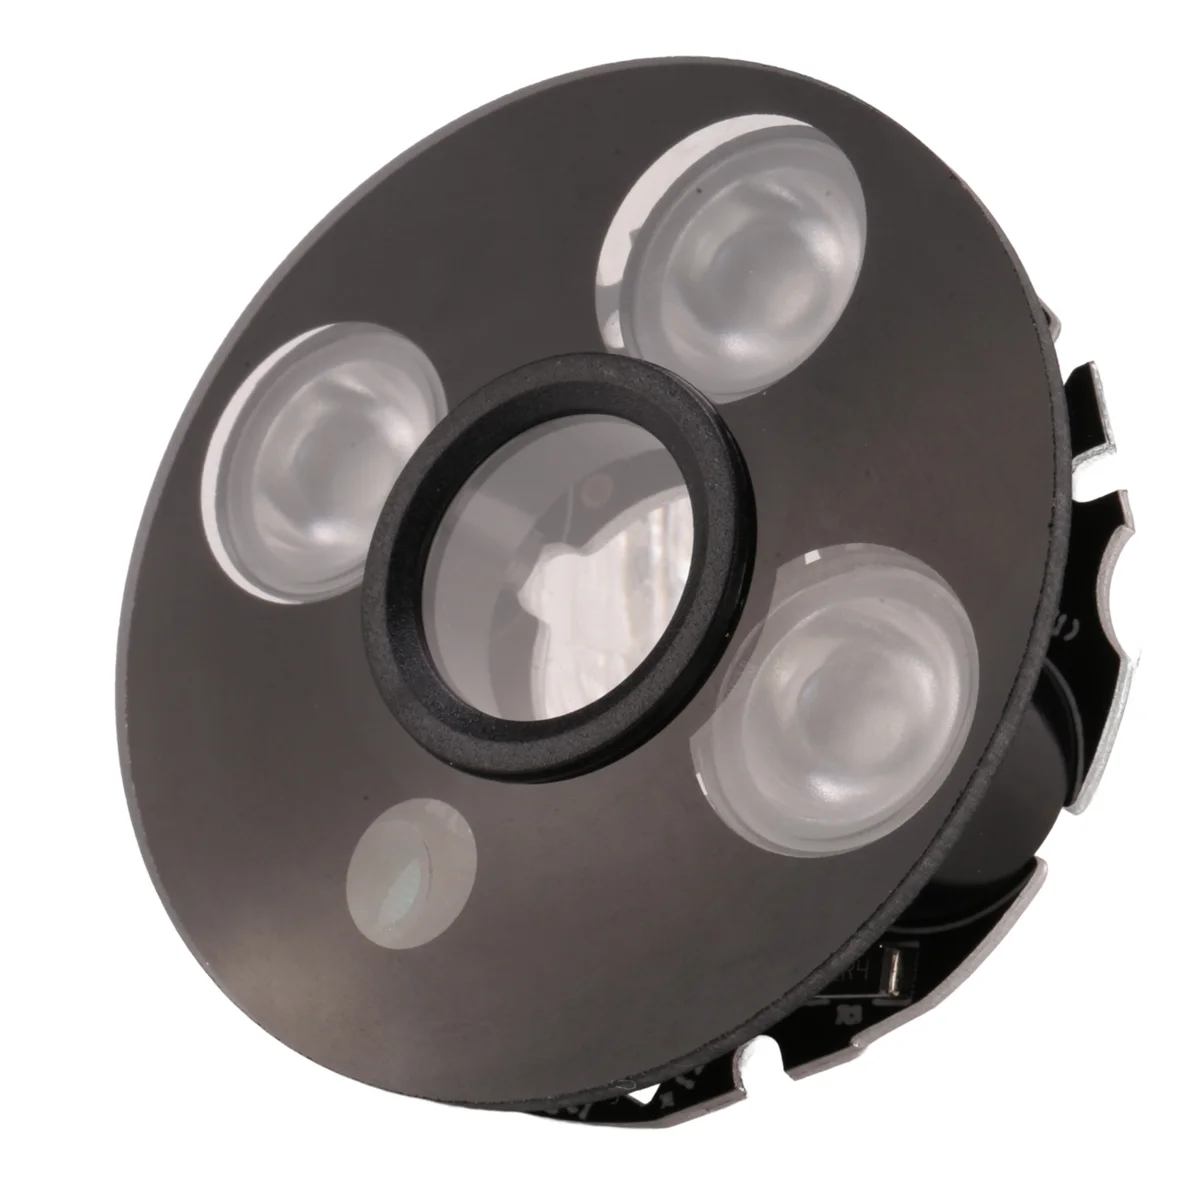 

3 array IR led Spot Light Infrared 3x IR LED board for CCTV cameras night vision (53mm diameter)